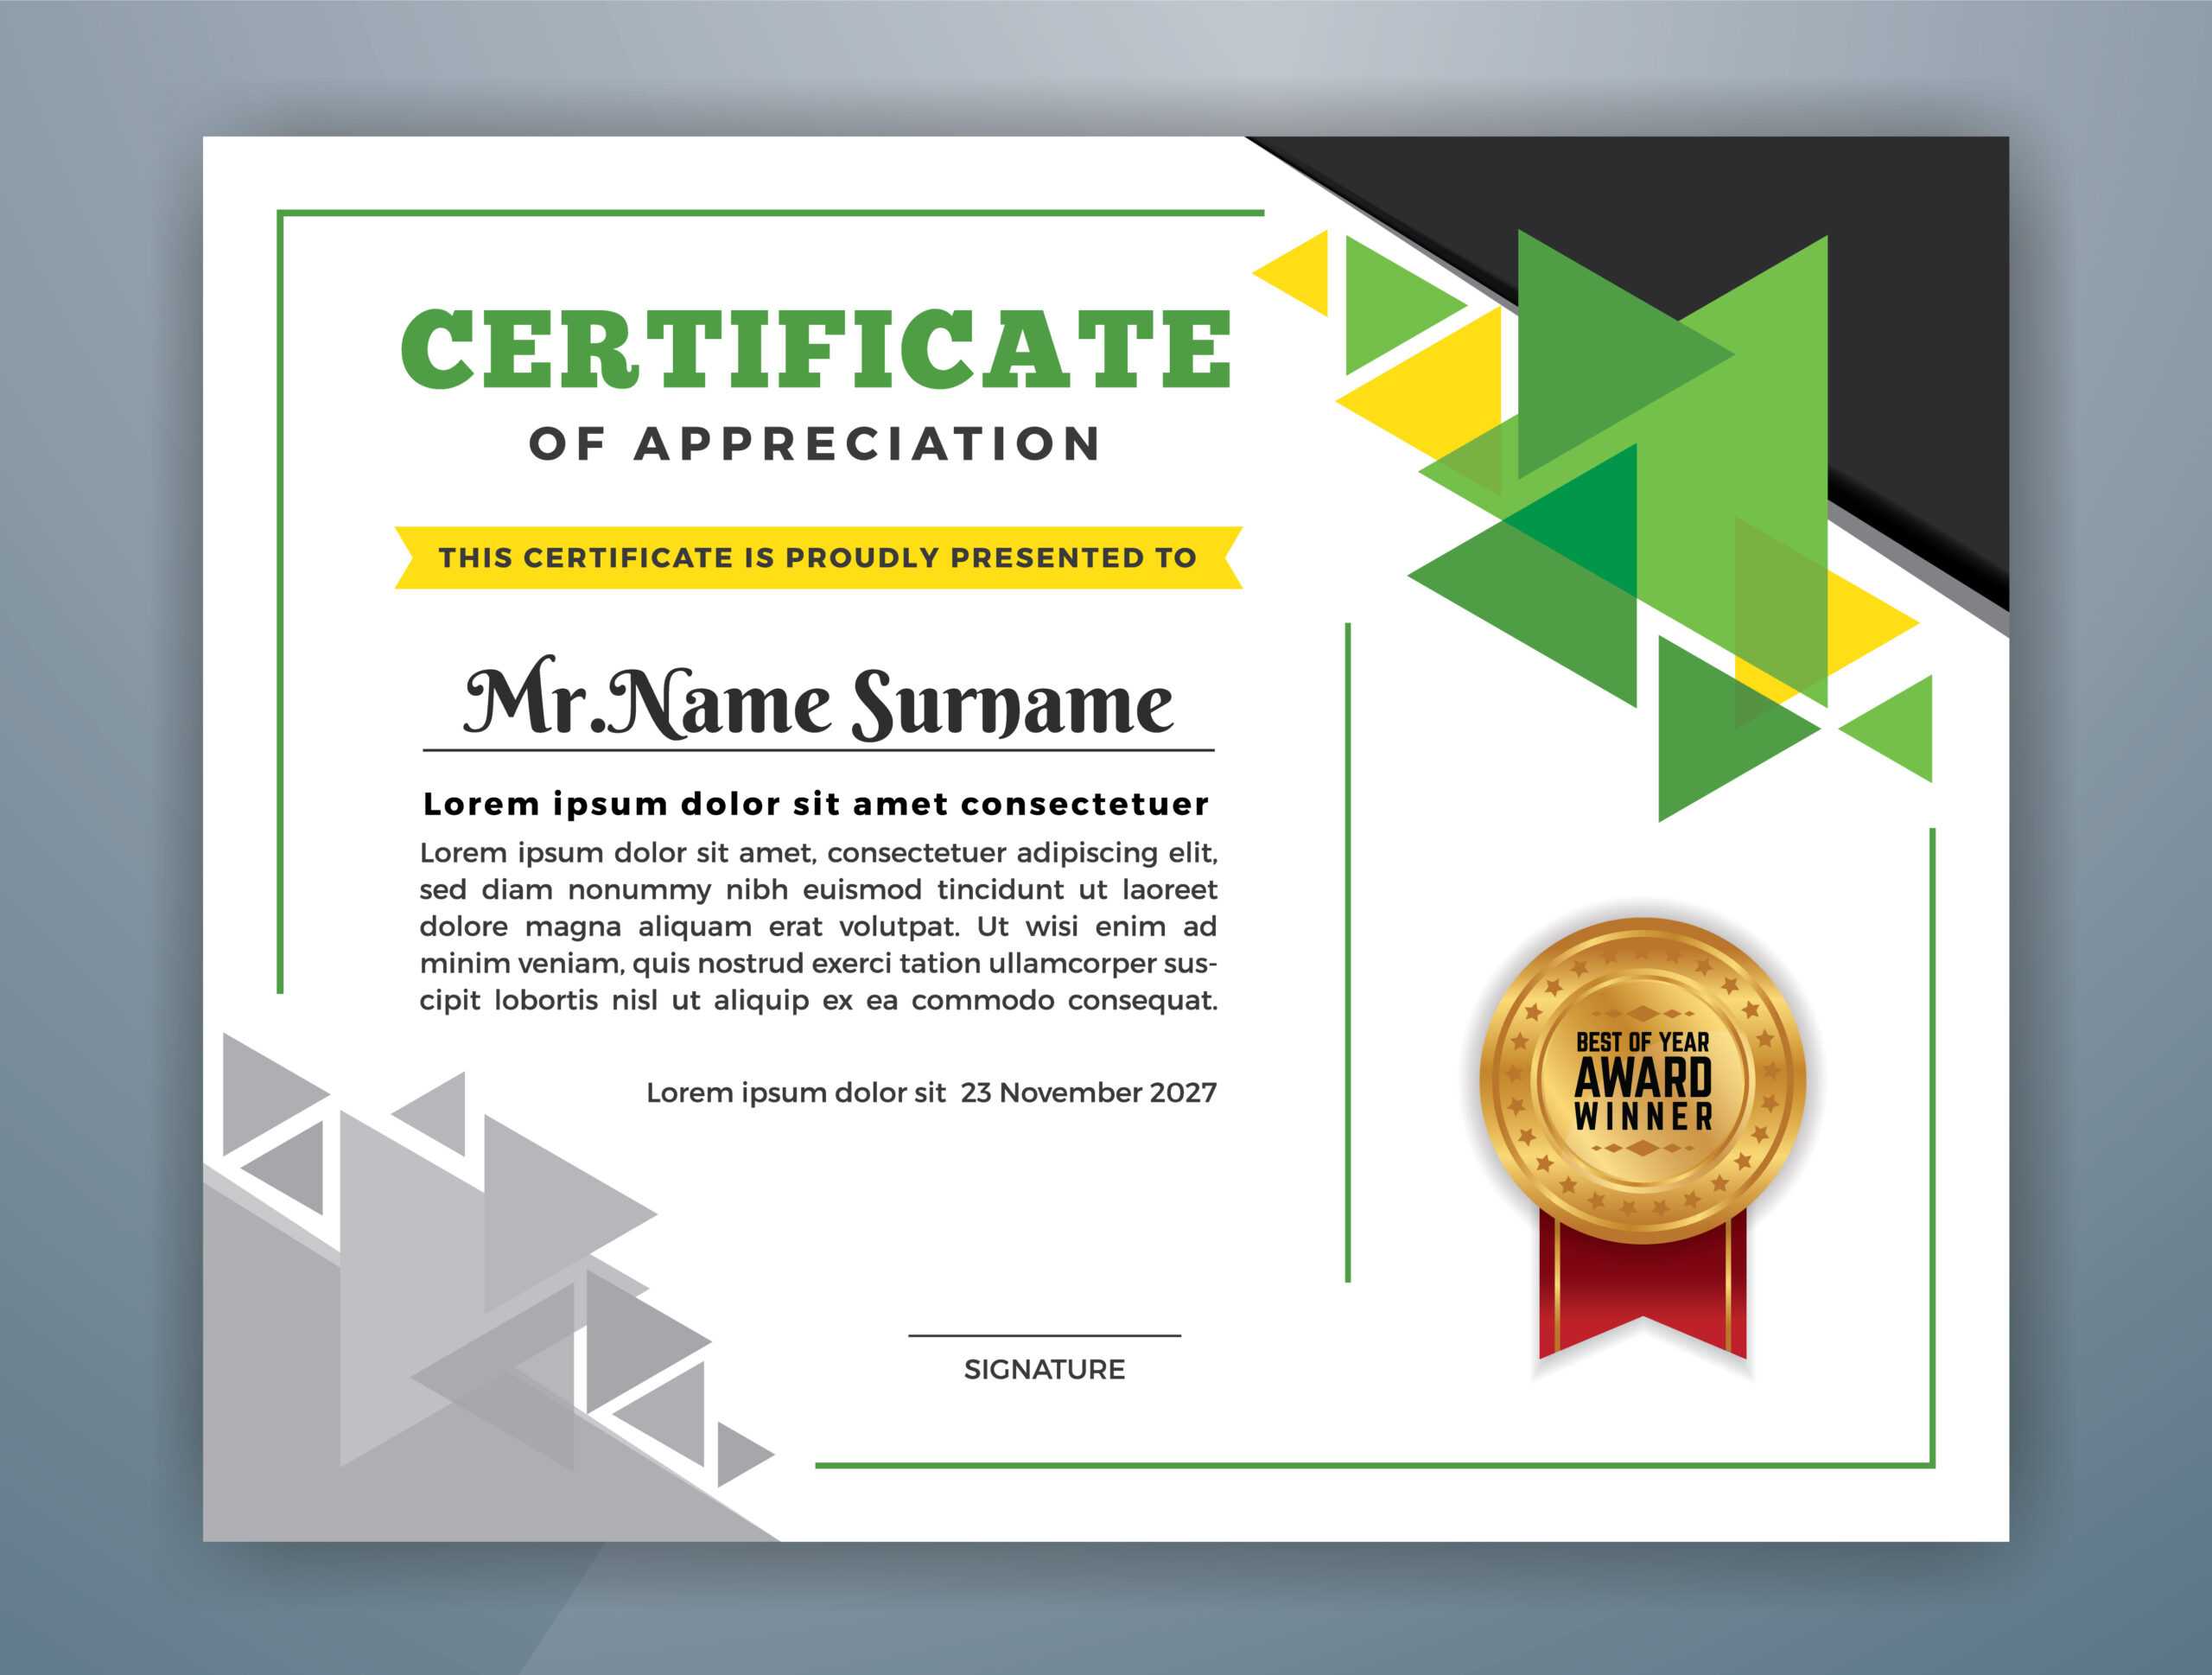 Multipurpose Professional Certificate Template Design With Boot Camp Certificate Template